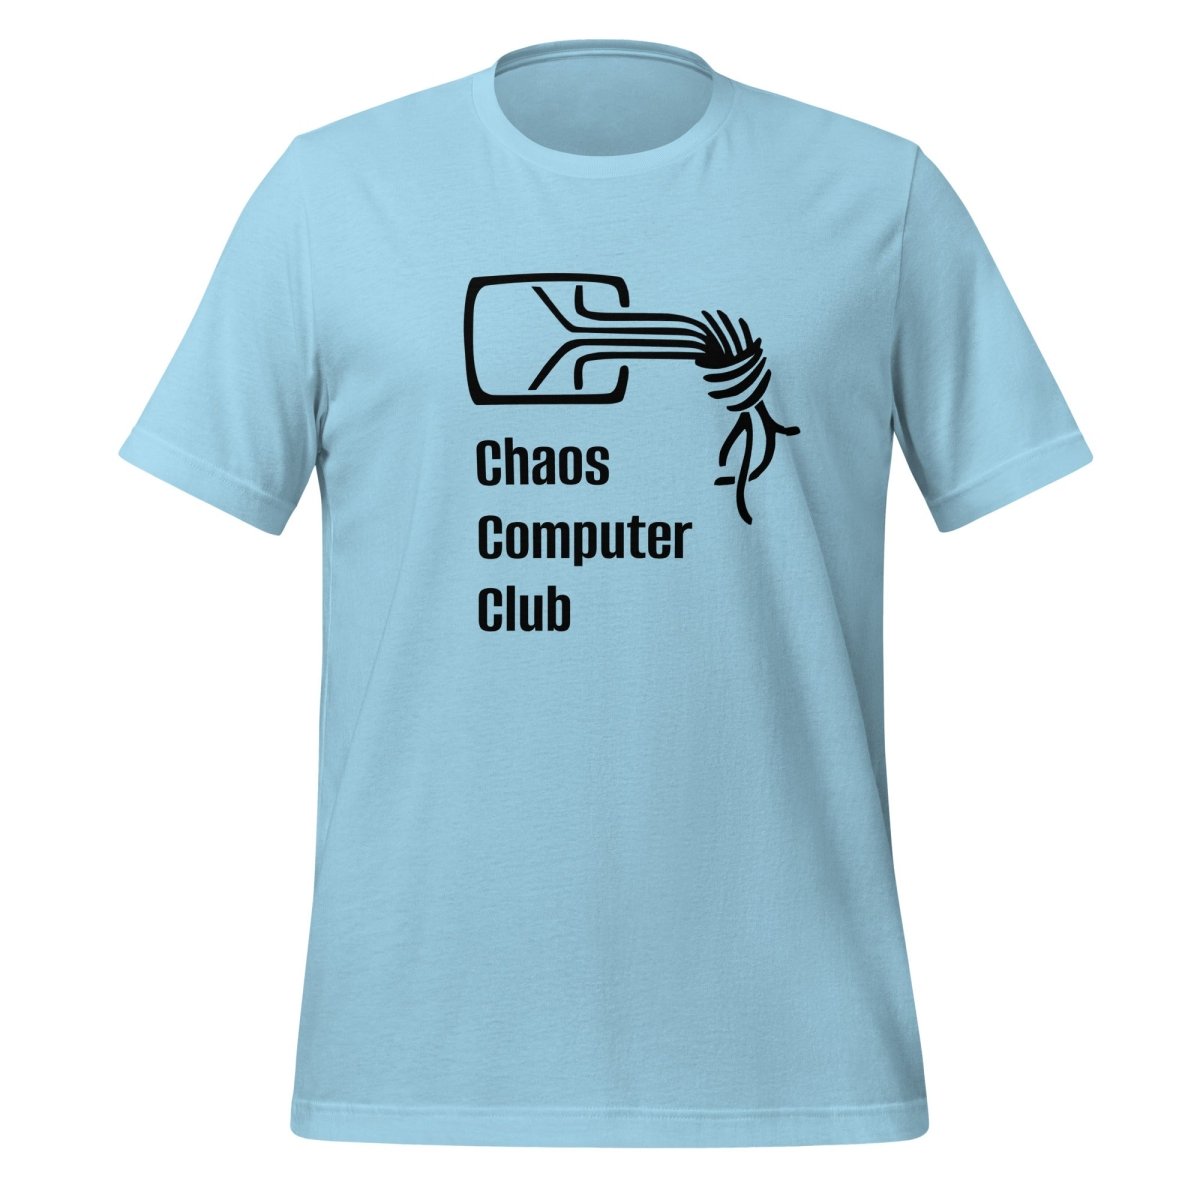 Chaos Computer Club Light T - Shirt (unisex) - Ocean Blue - AI Store